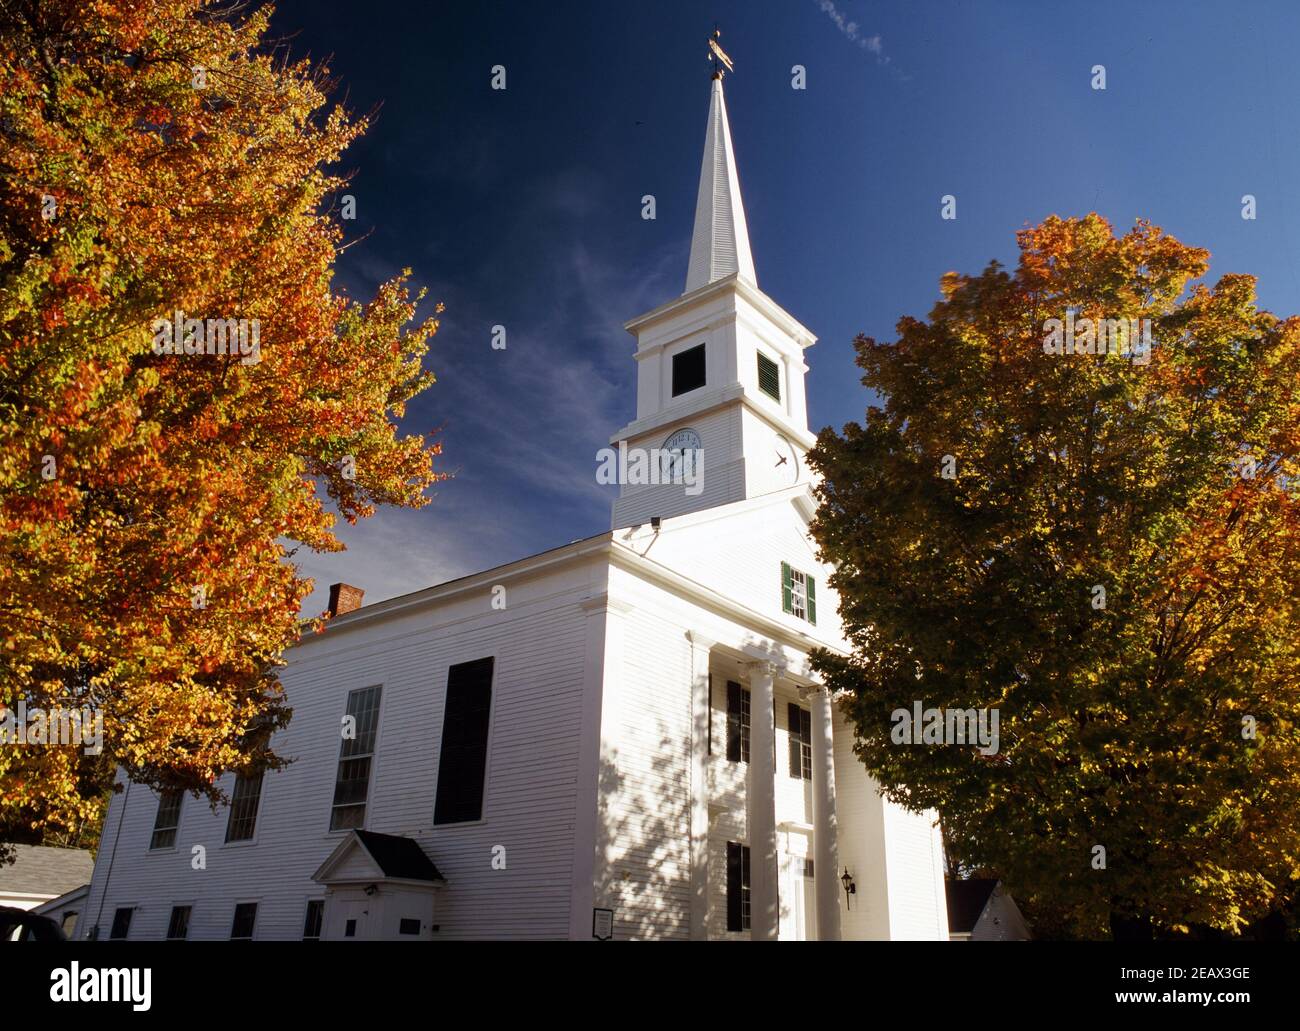 Dublin New Hampshire church in autumn Stock Photo